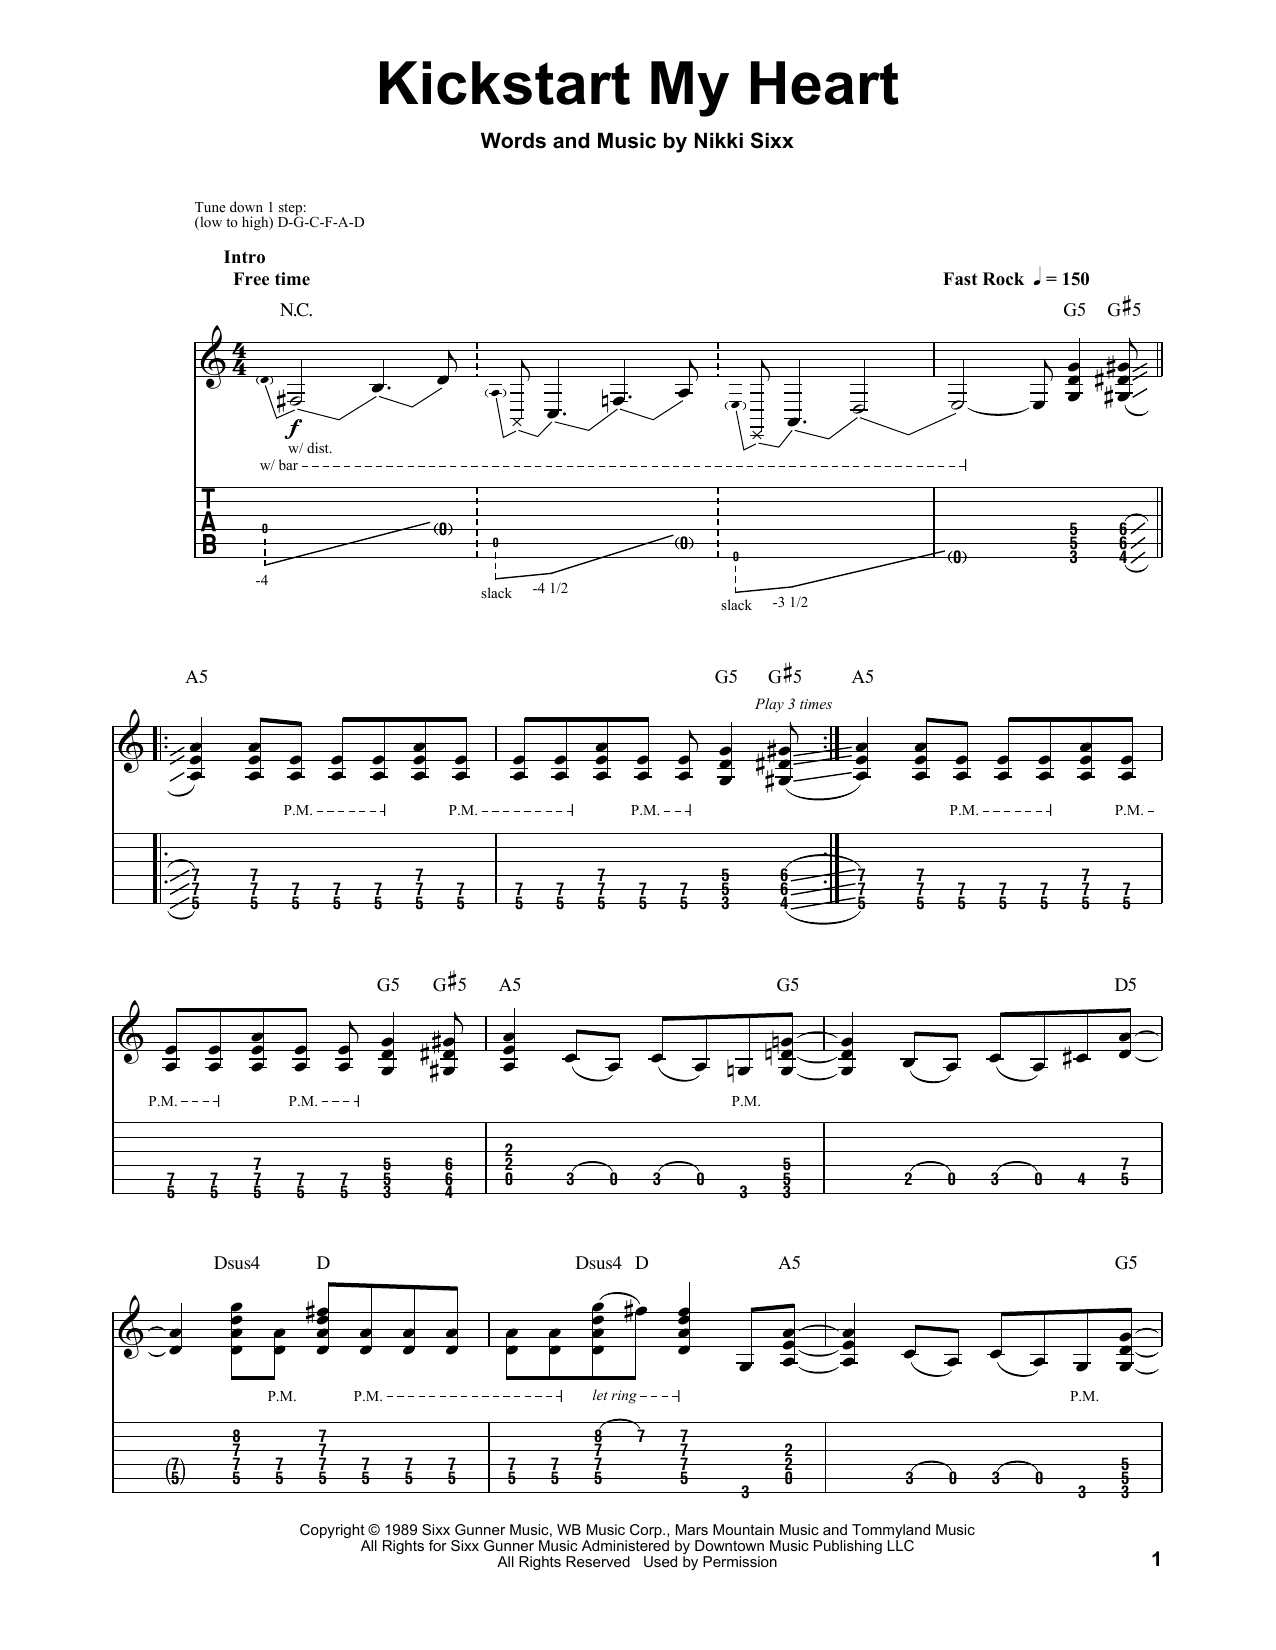 Motley Crue Kickstart My Heart Sheet Music Notes & Chords for Guitar Tab Play-Along - Download or Print PDF